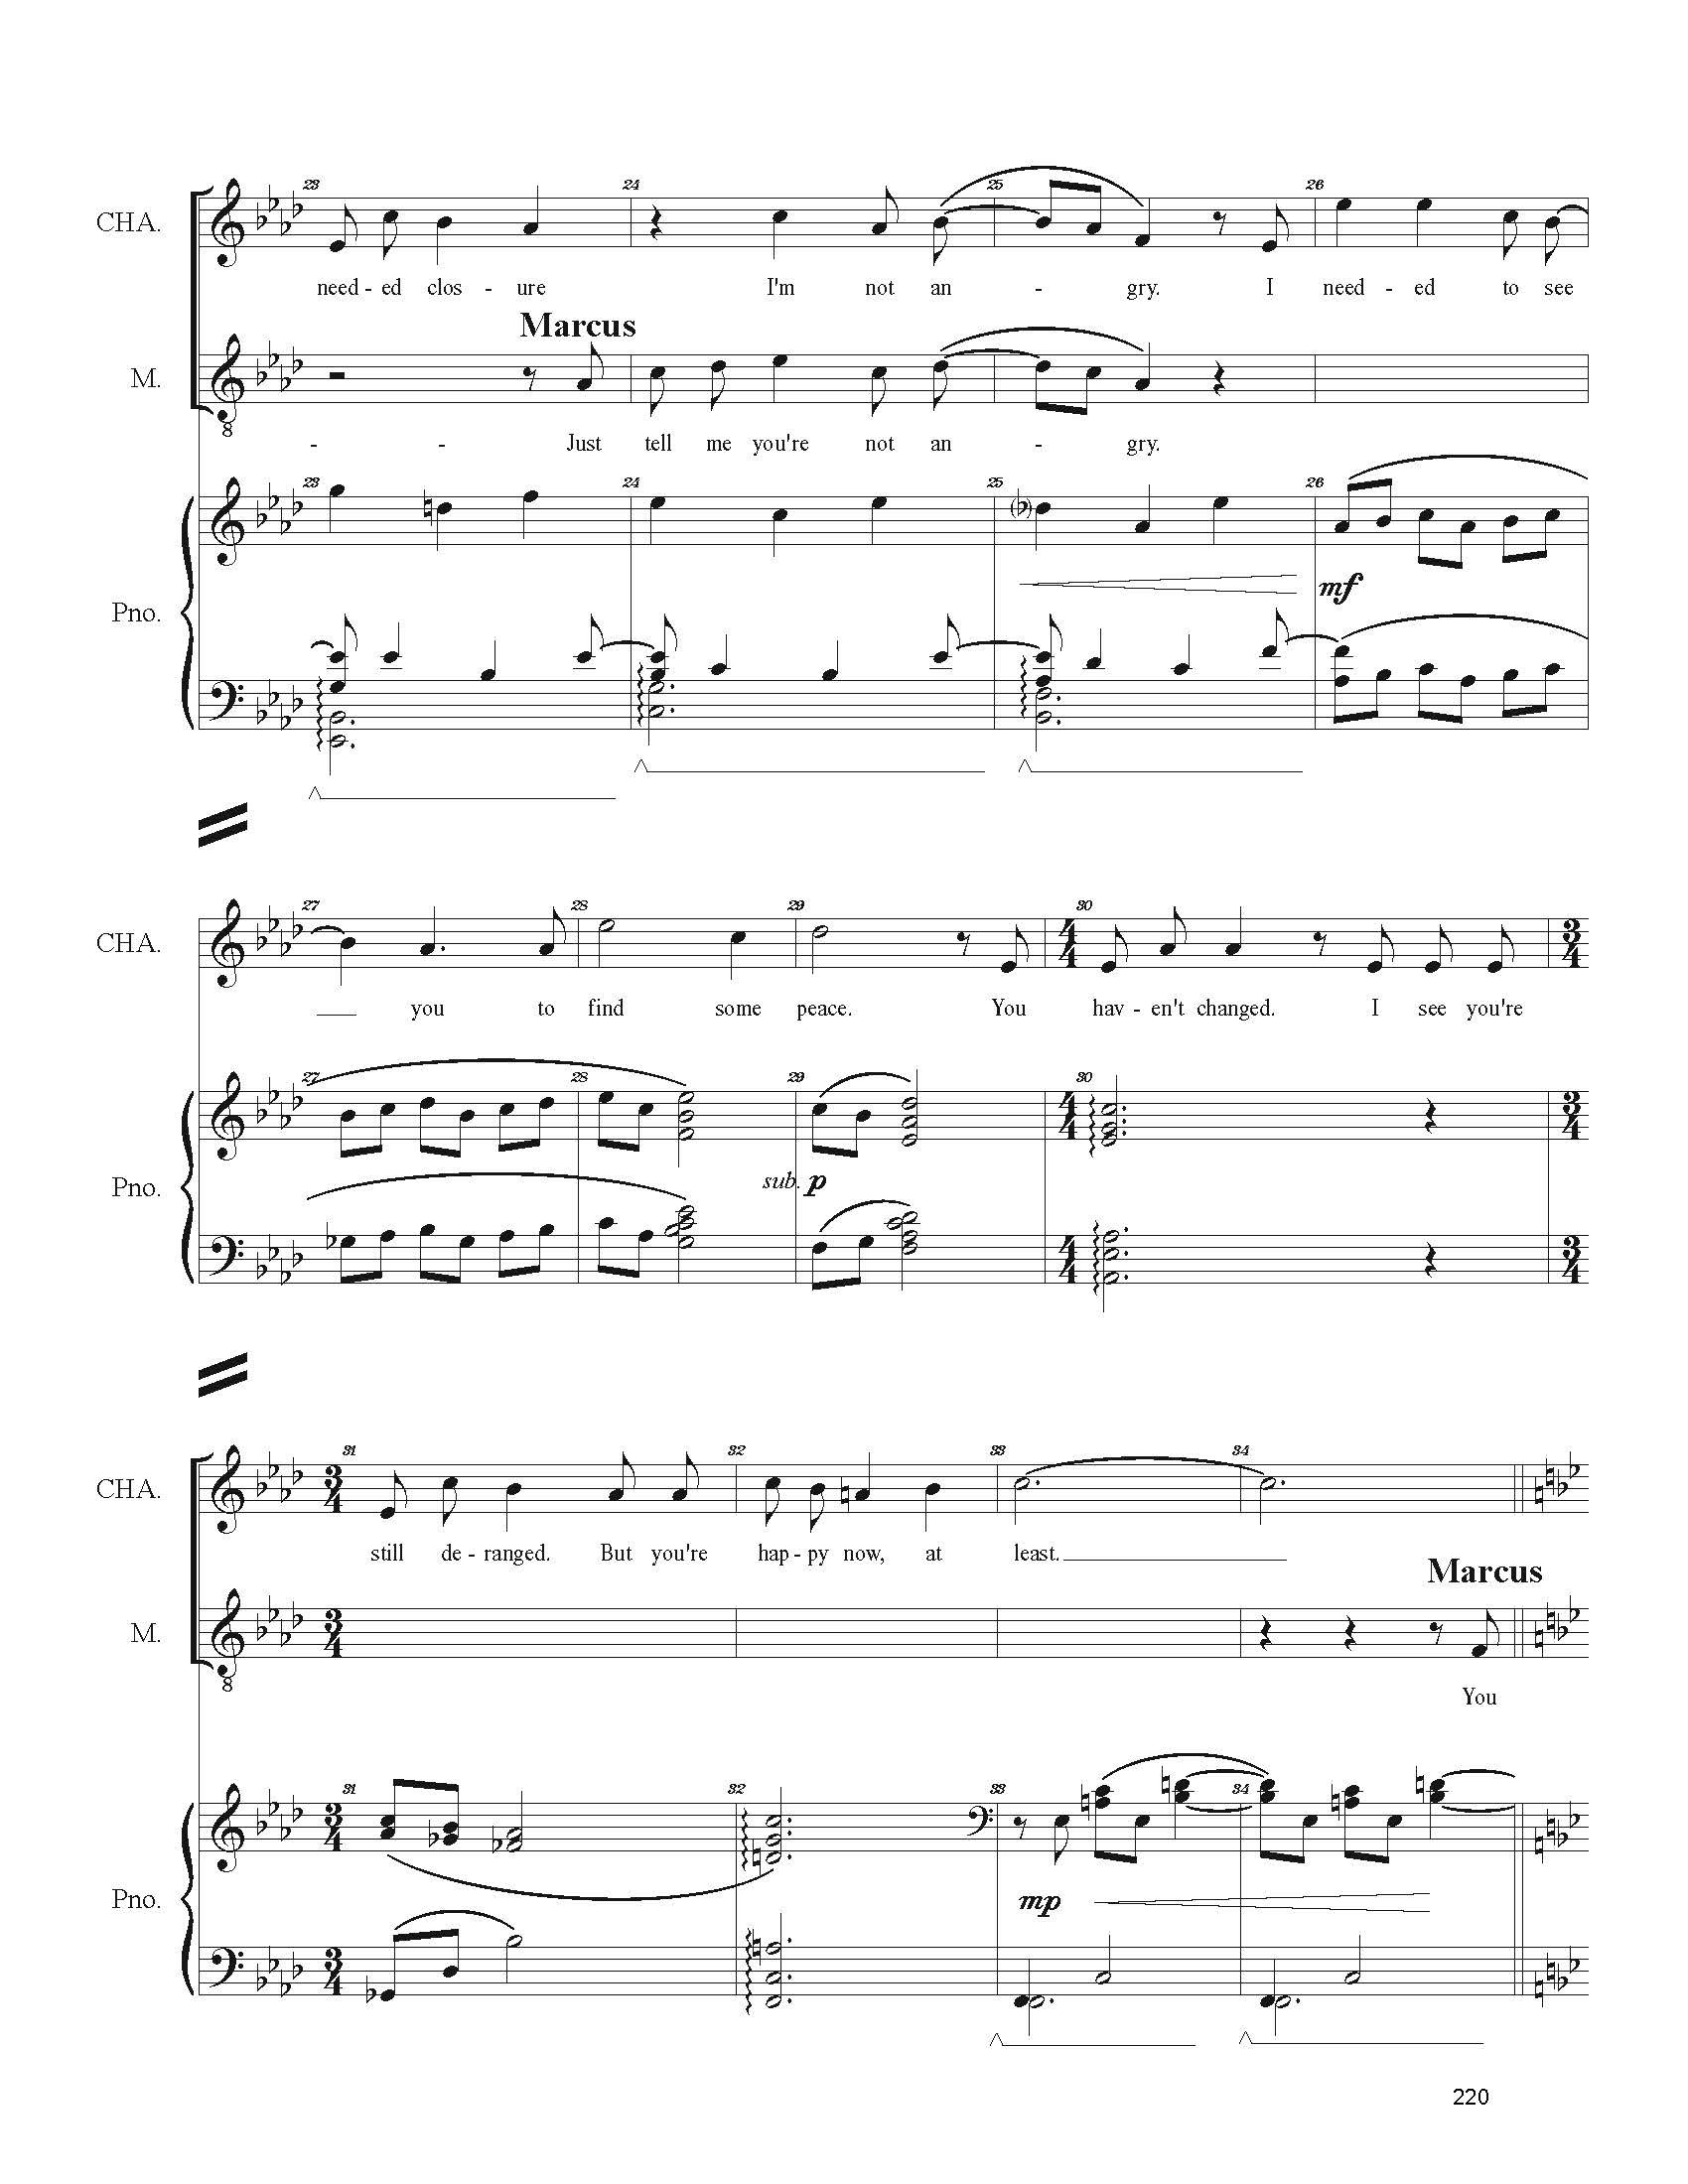 FULL PIANO VOCAL SCORE DRAFT 1 - Score_Page_220.jpg